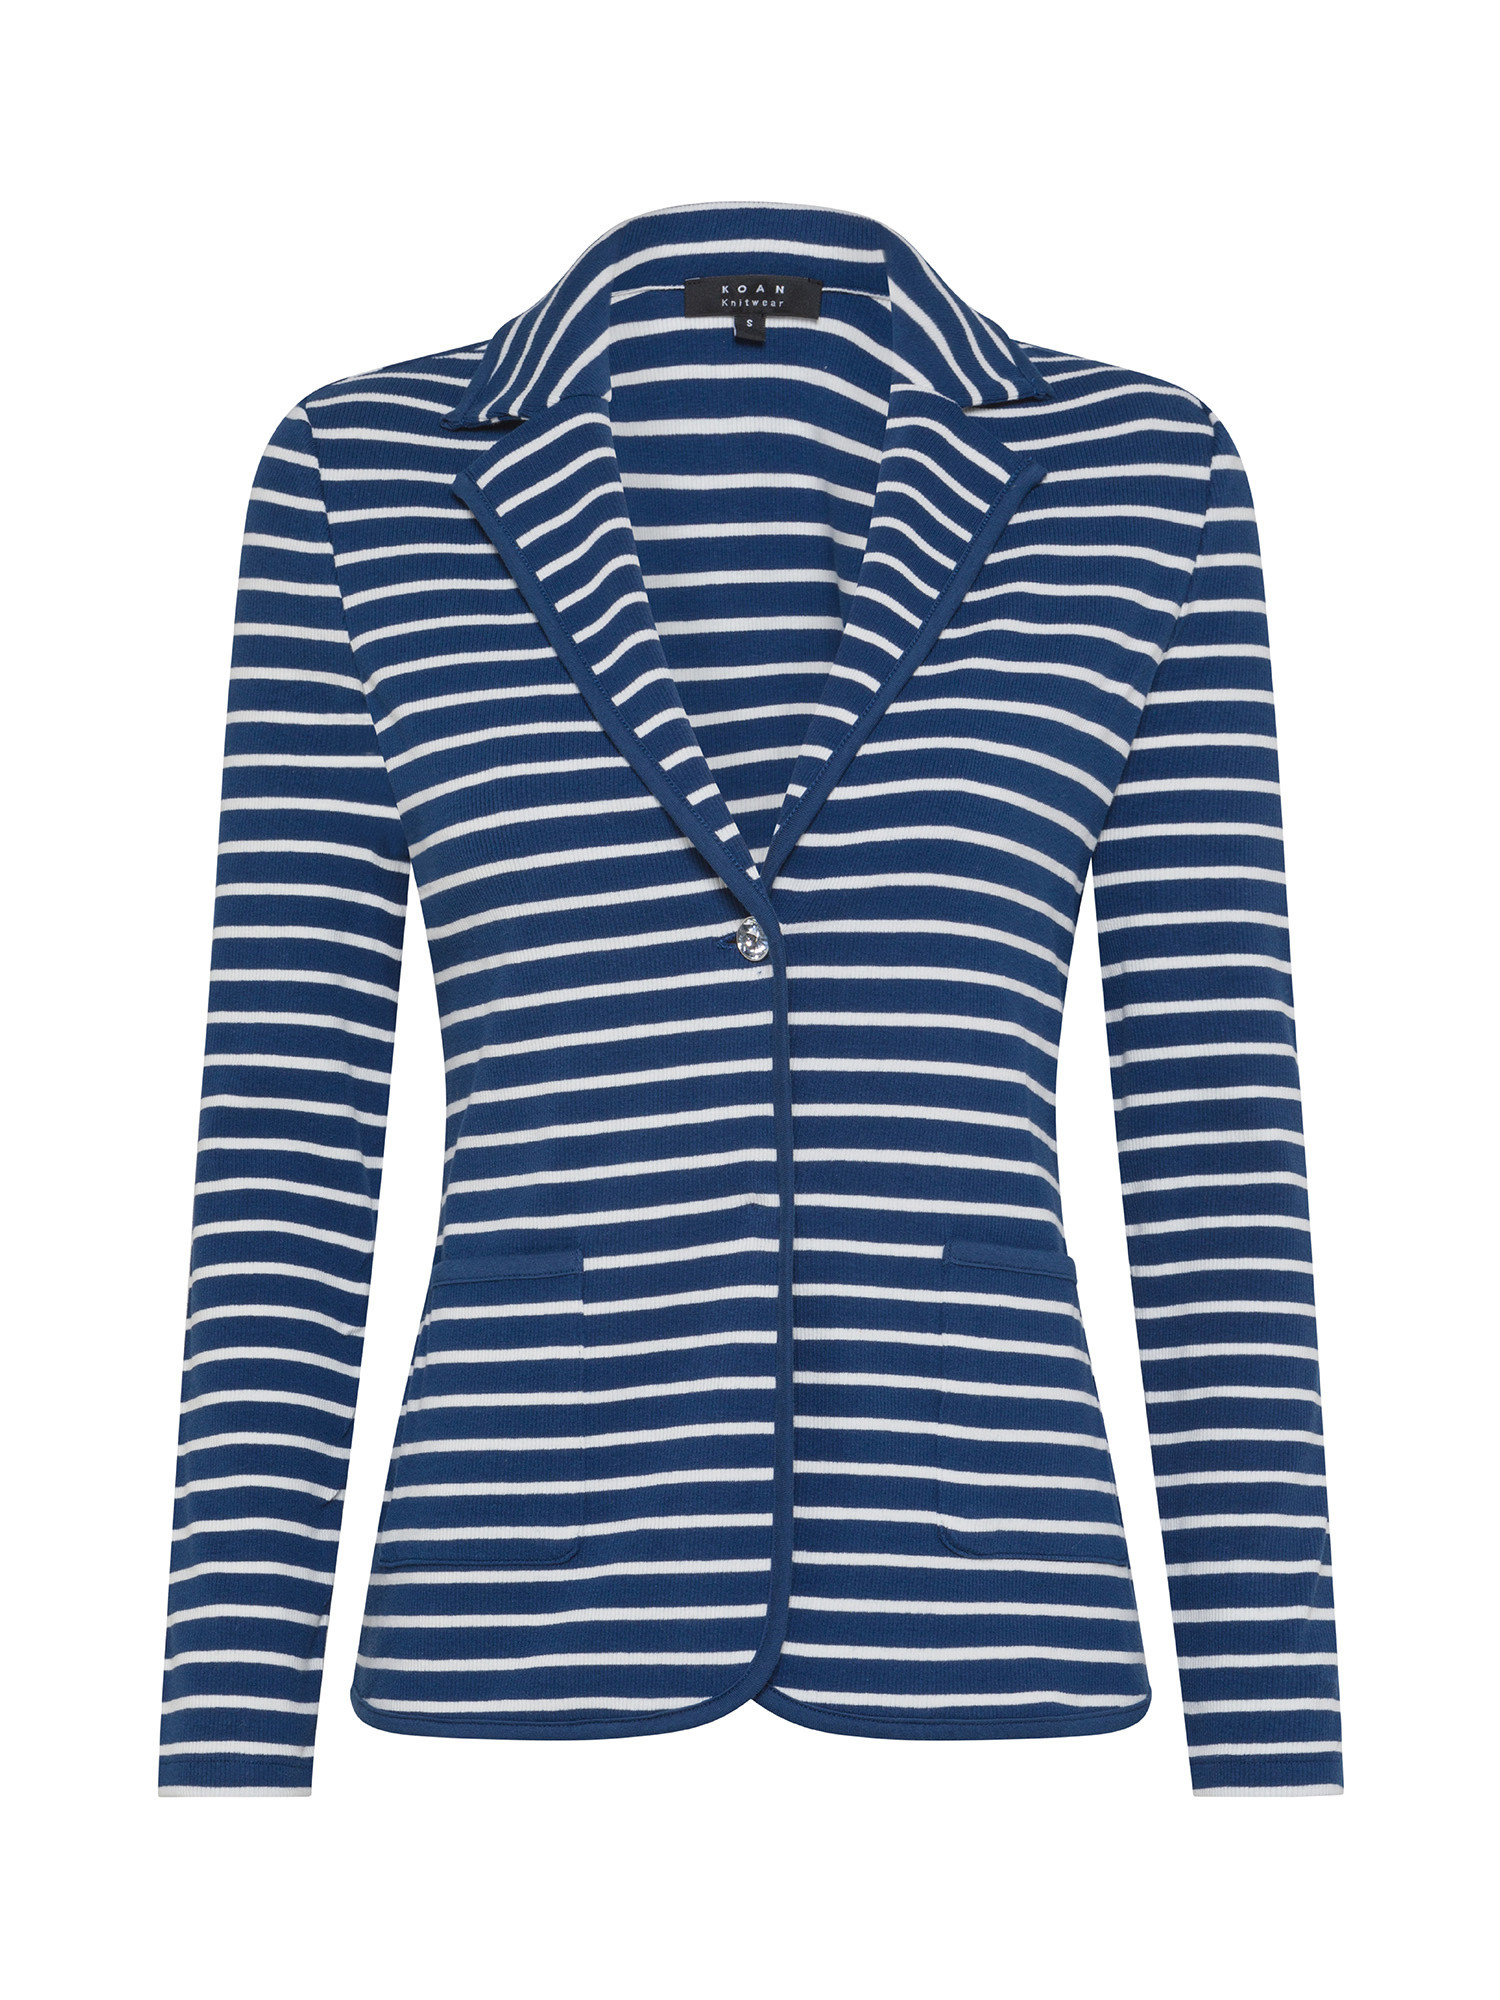 Koan - Ribbed jacket with stripes, Dark Blue, large image number 0